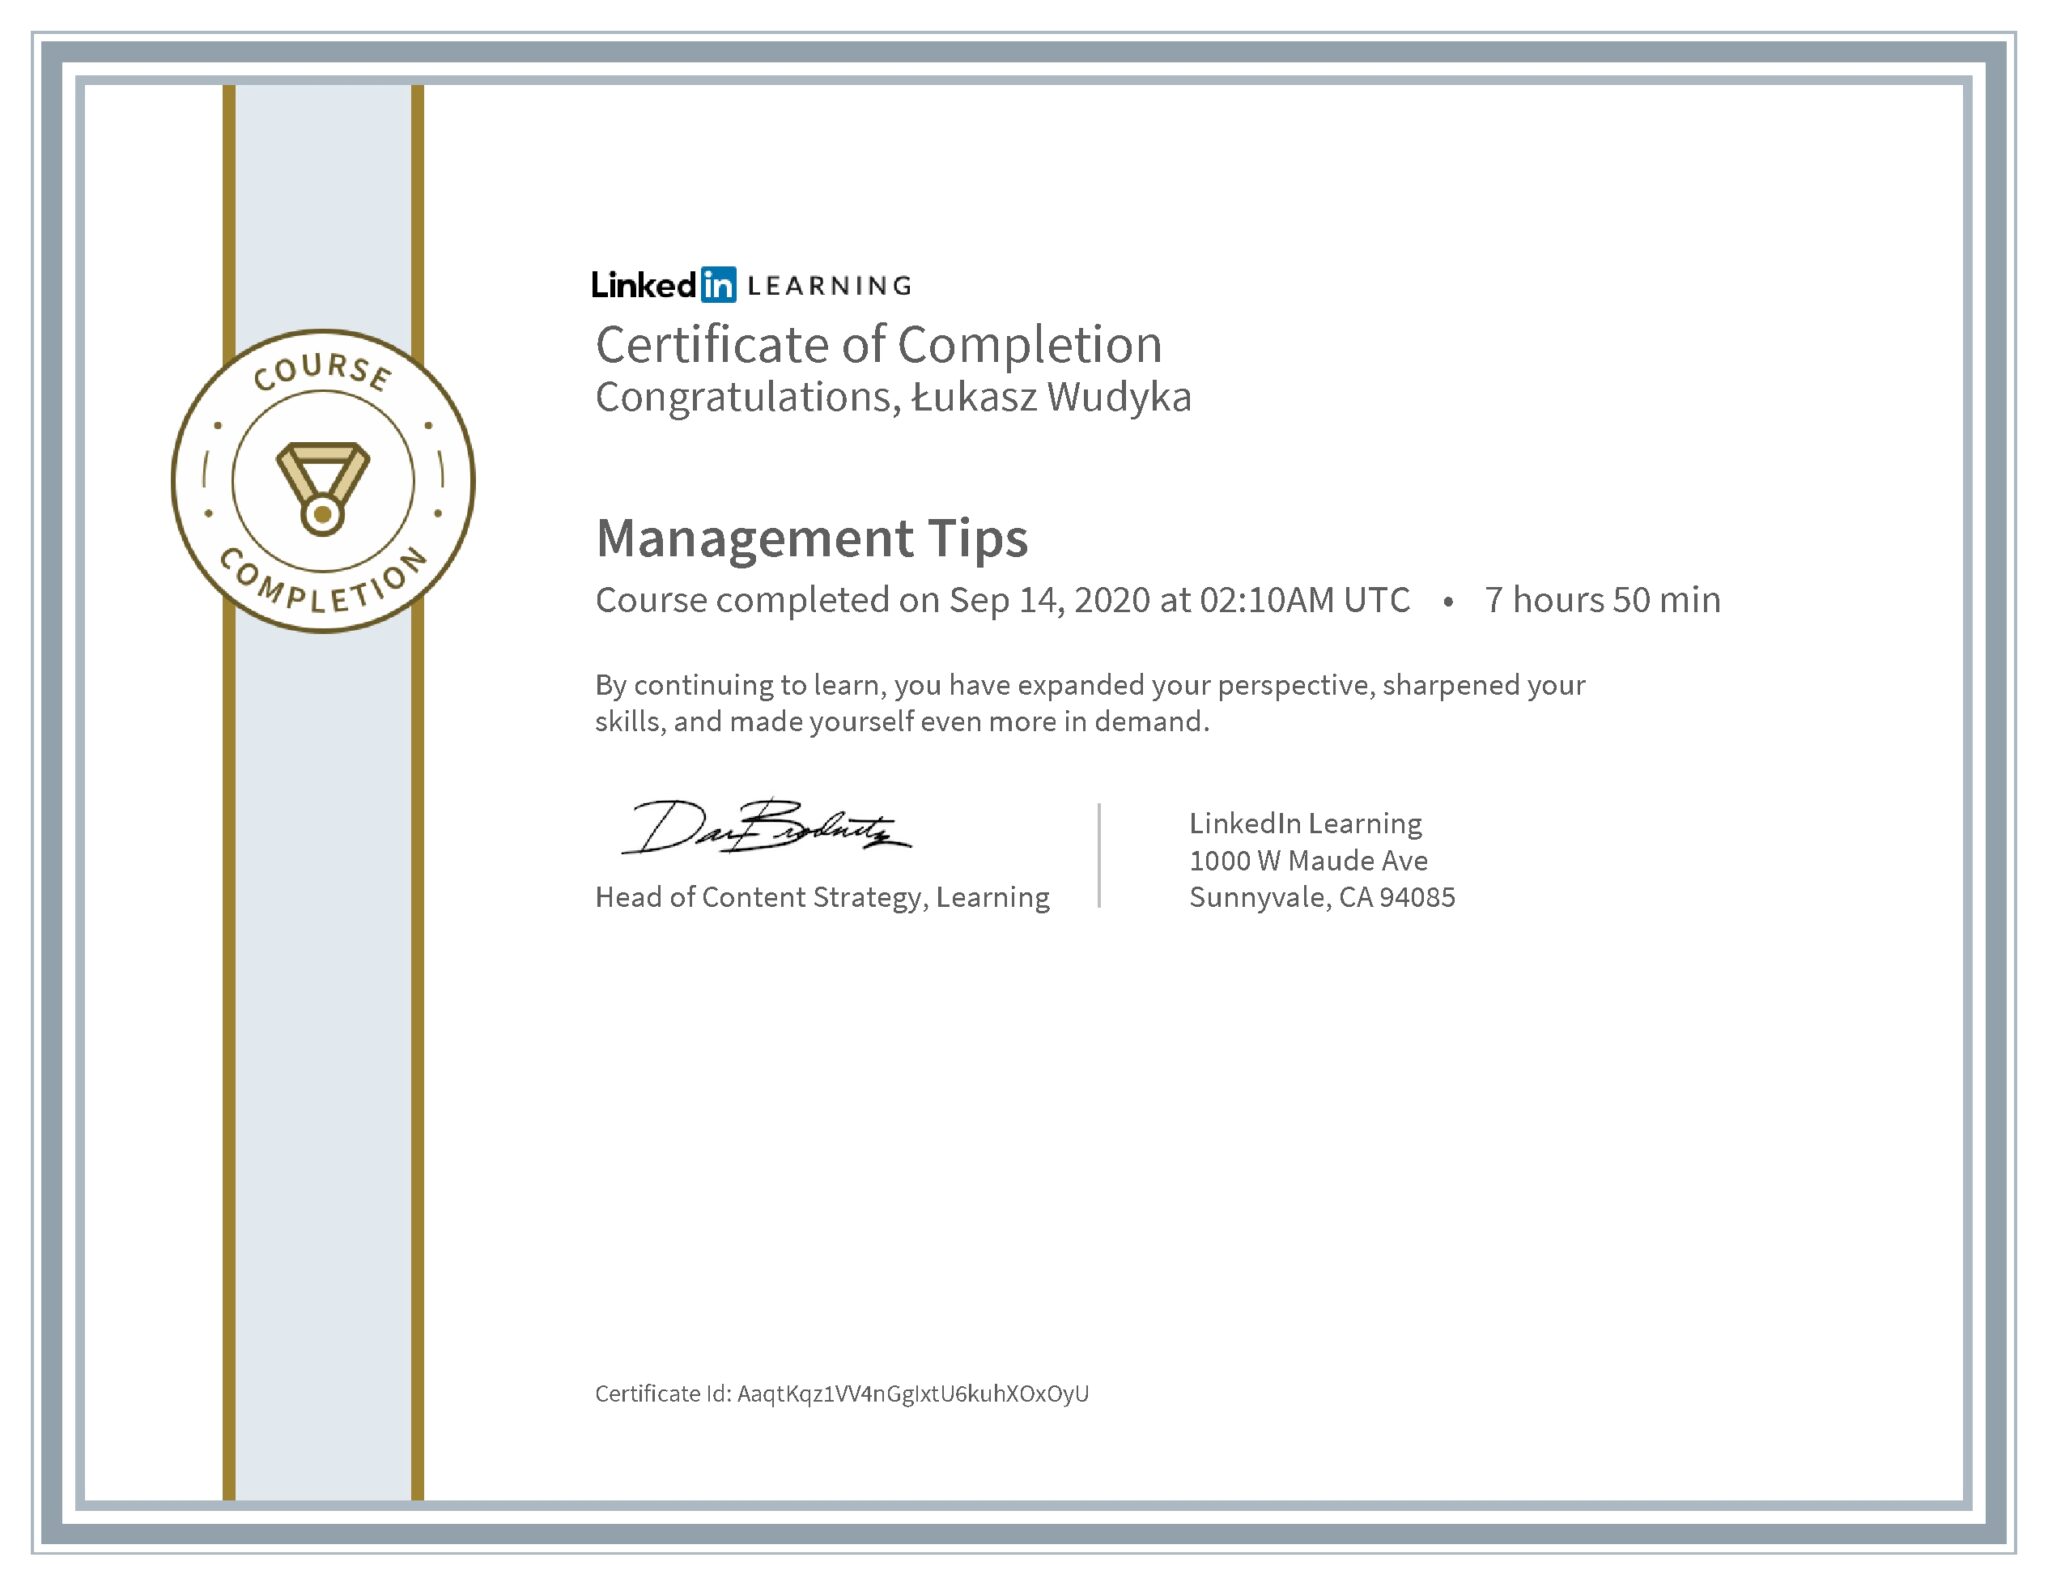 Łukasz Wudyka certyfikat LinkedIn Management Tips